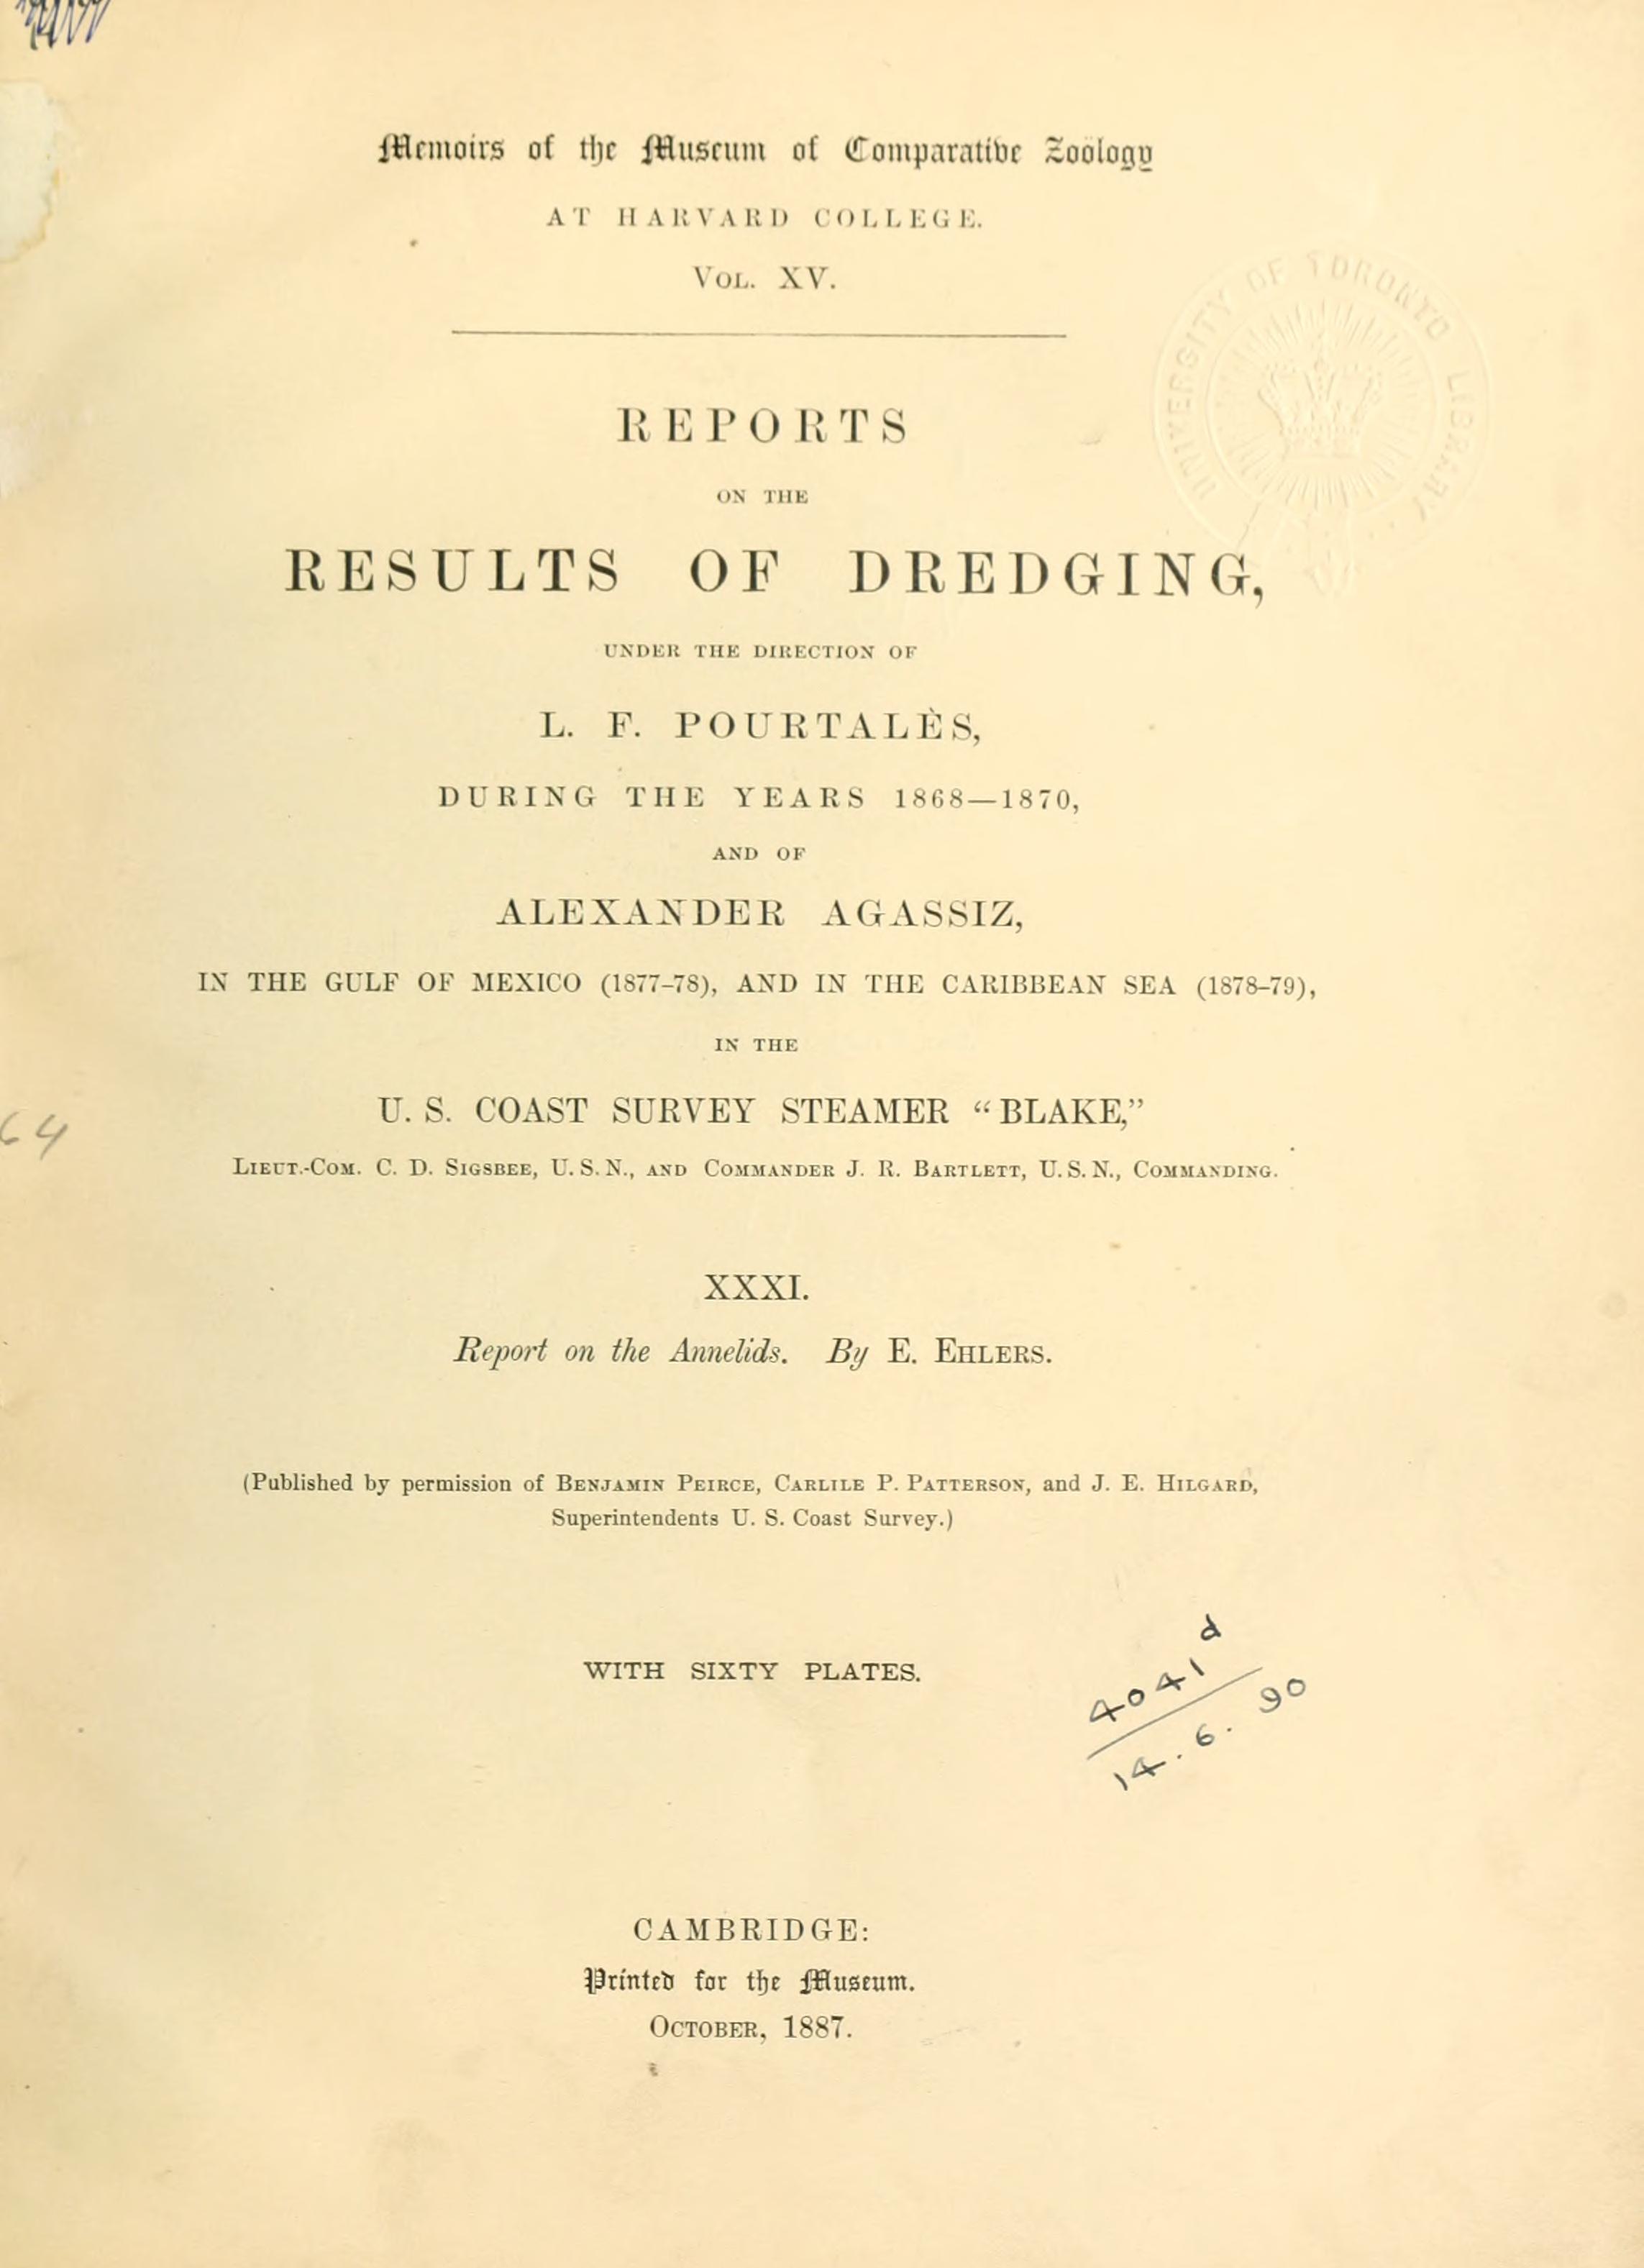 Media type: text; Ehlers 1887 Description: MCZ Memoirs Vol. XV no. 1;